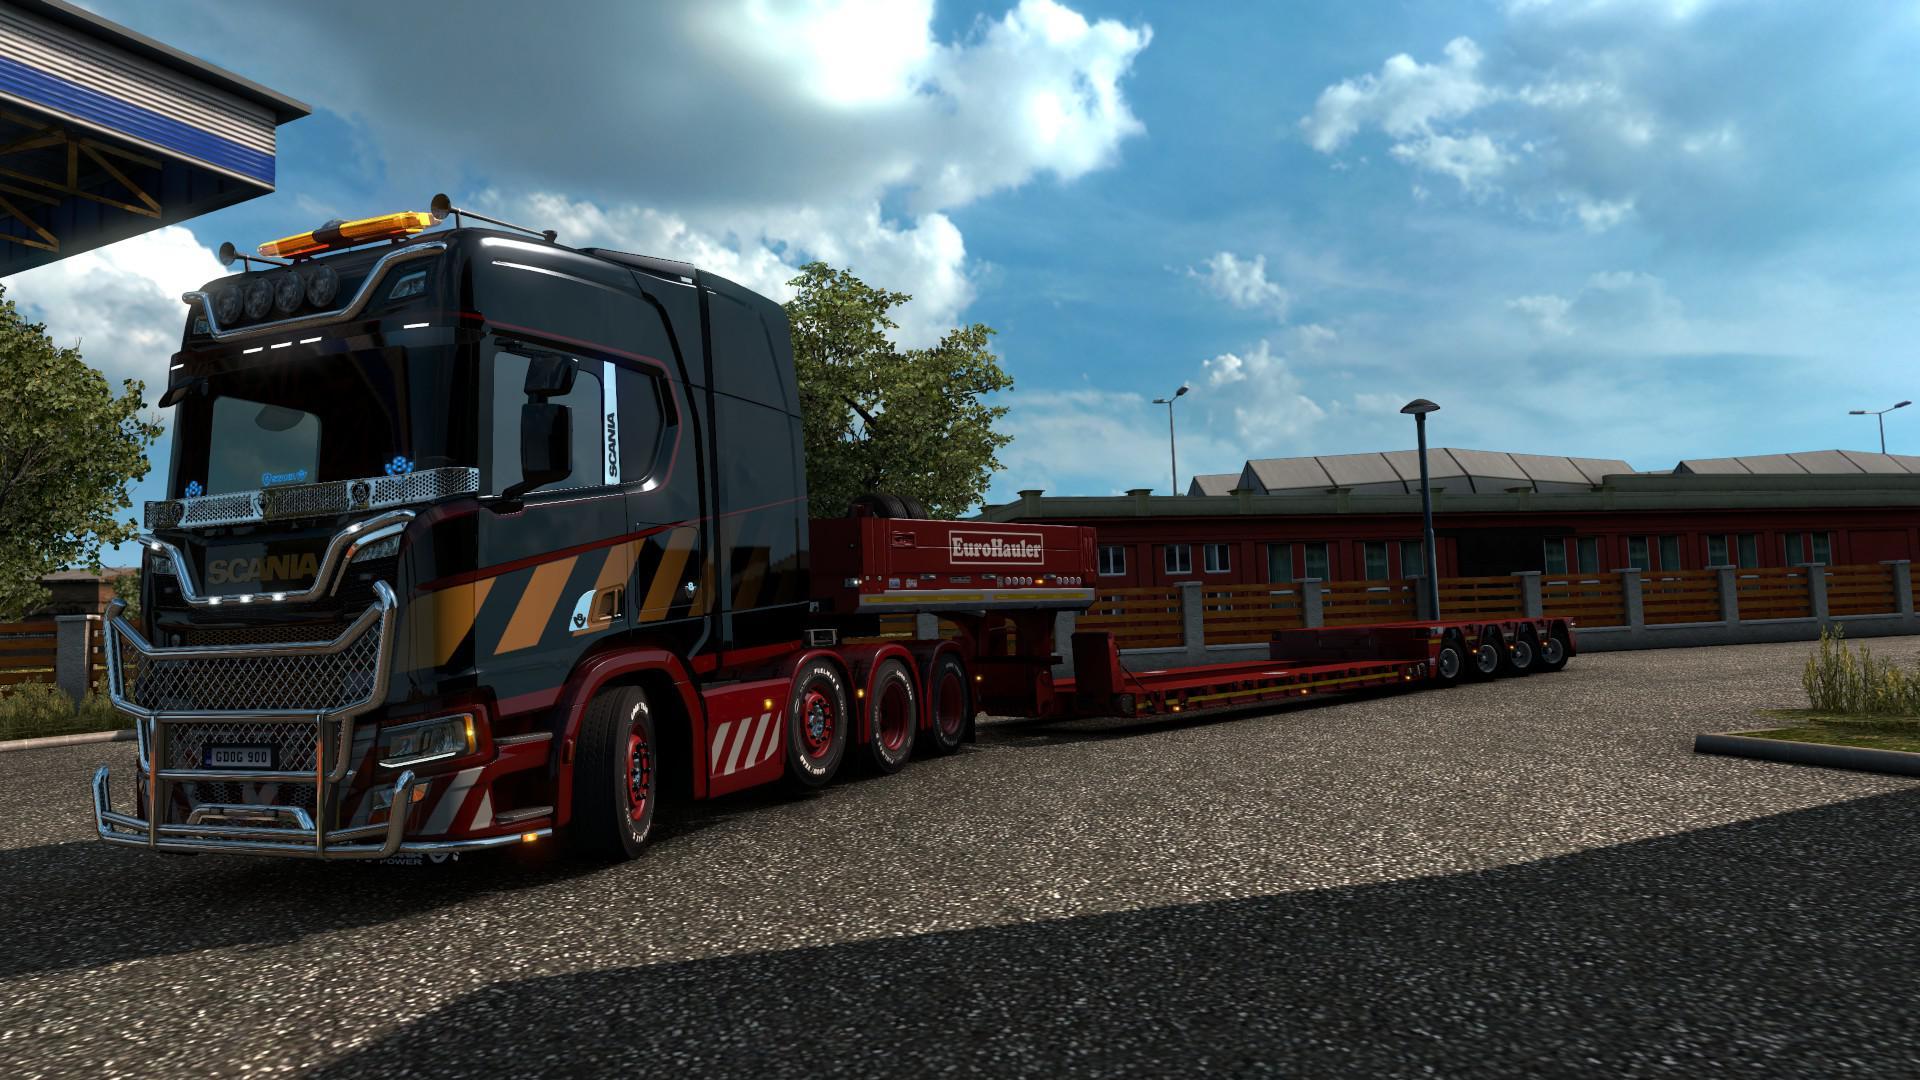 scs software euro truck simulator 2 mods indian bus mods